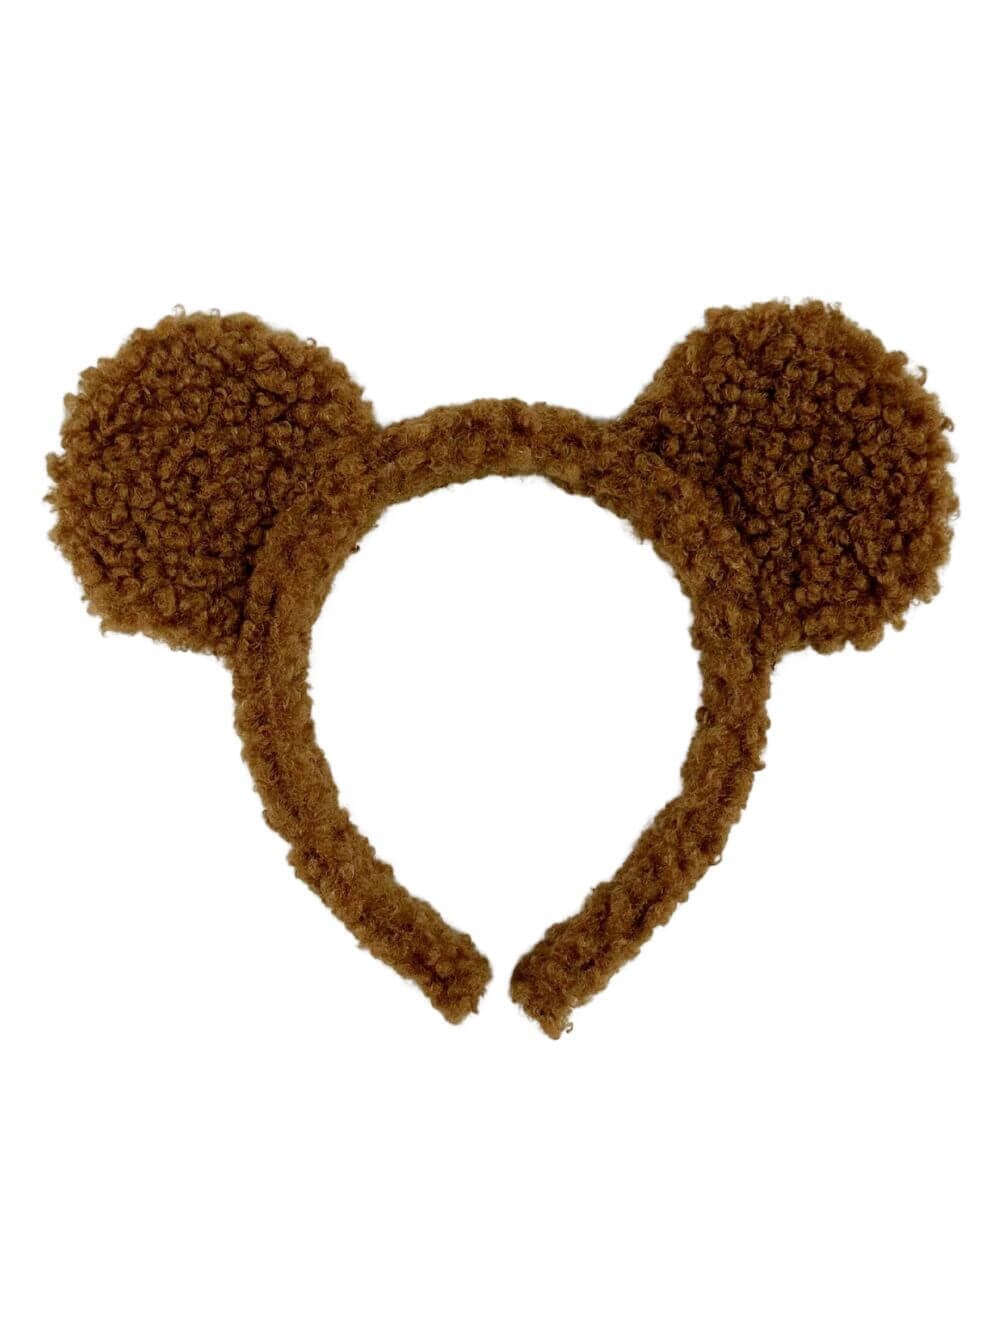 Brown Bear Girls Headband Ears, Kid or Adult Size Costume Accessories